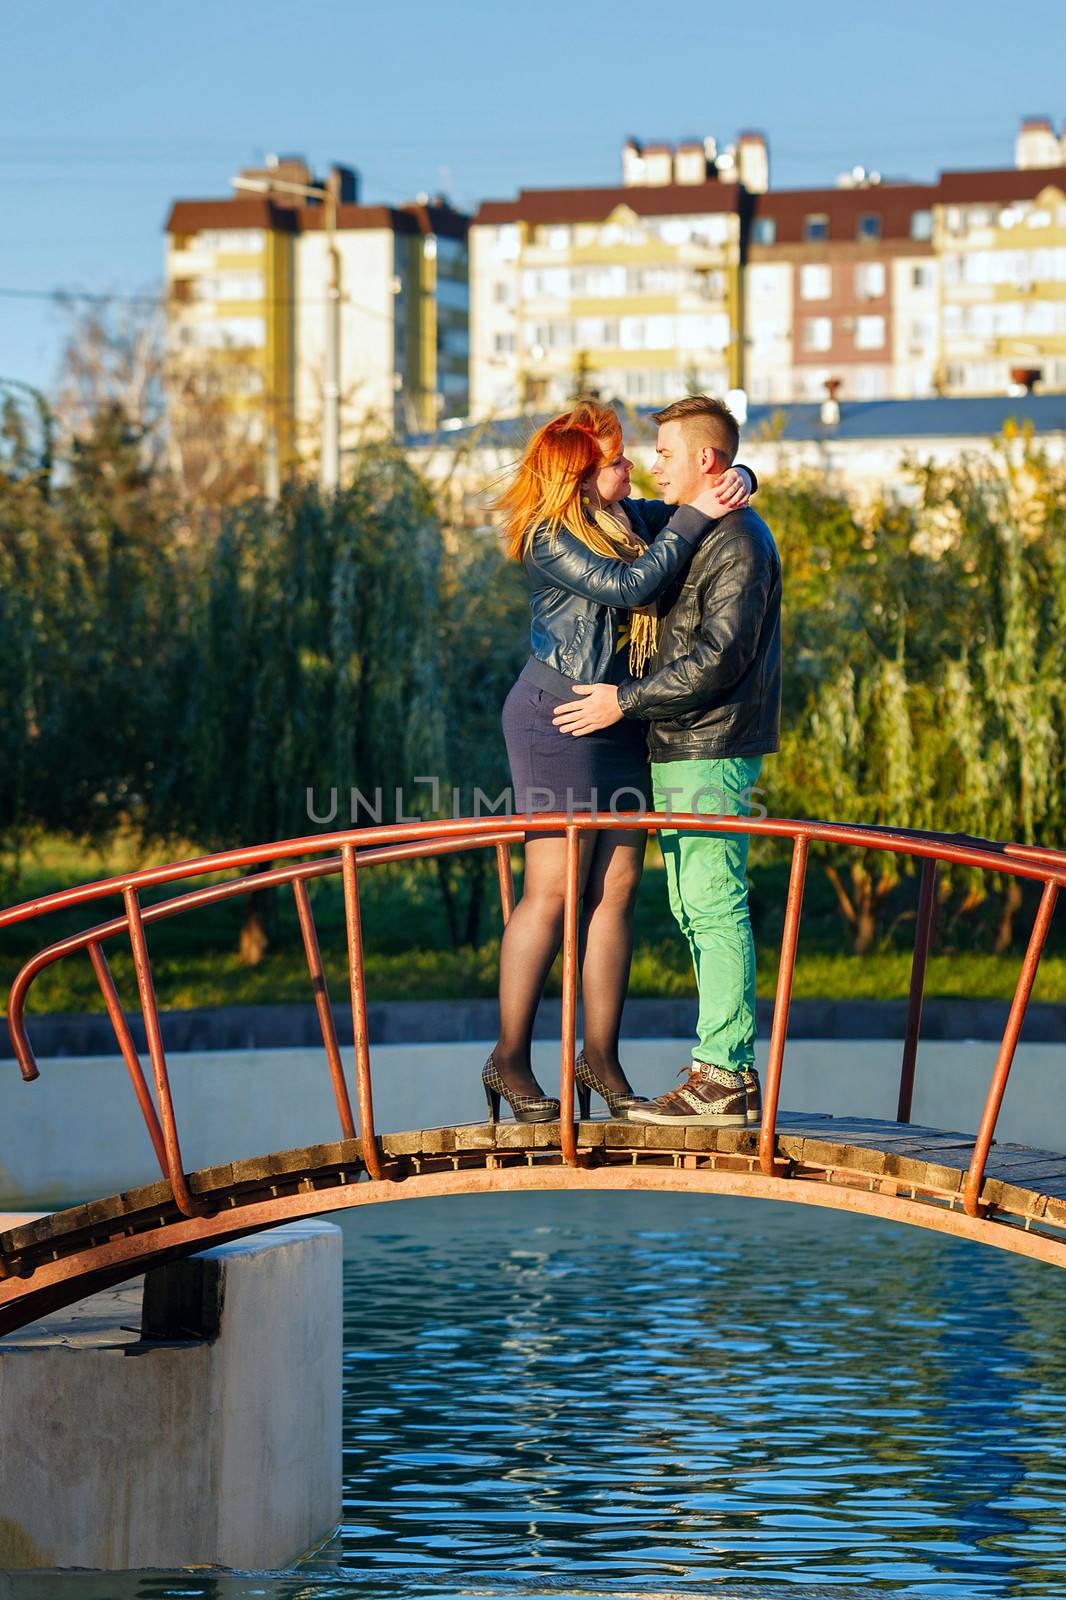 Couple embracing on the bridge by Vagengeym